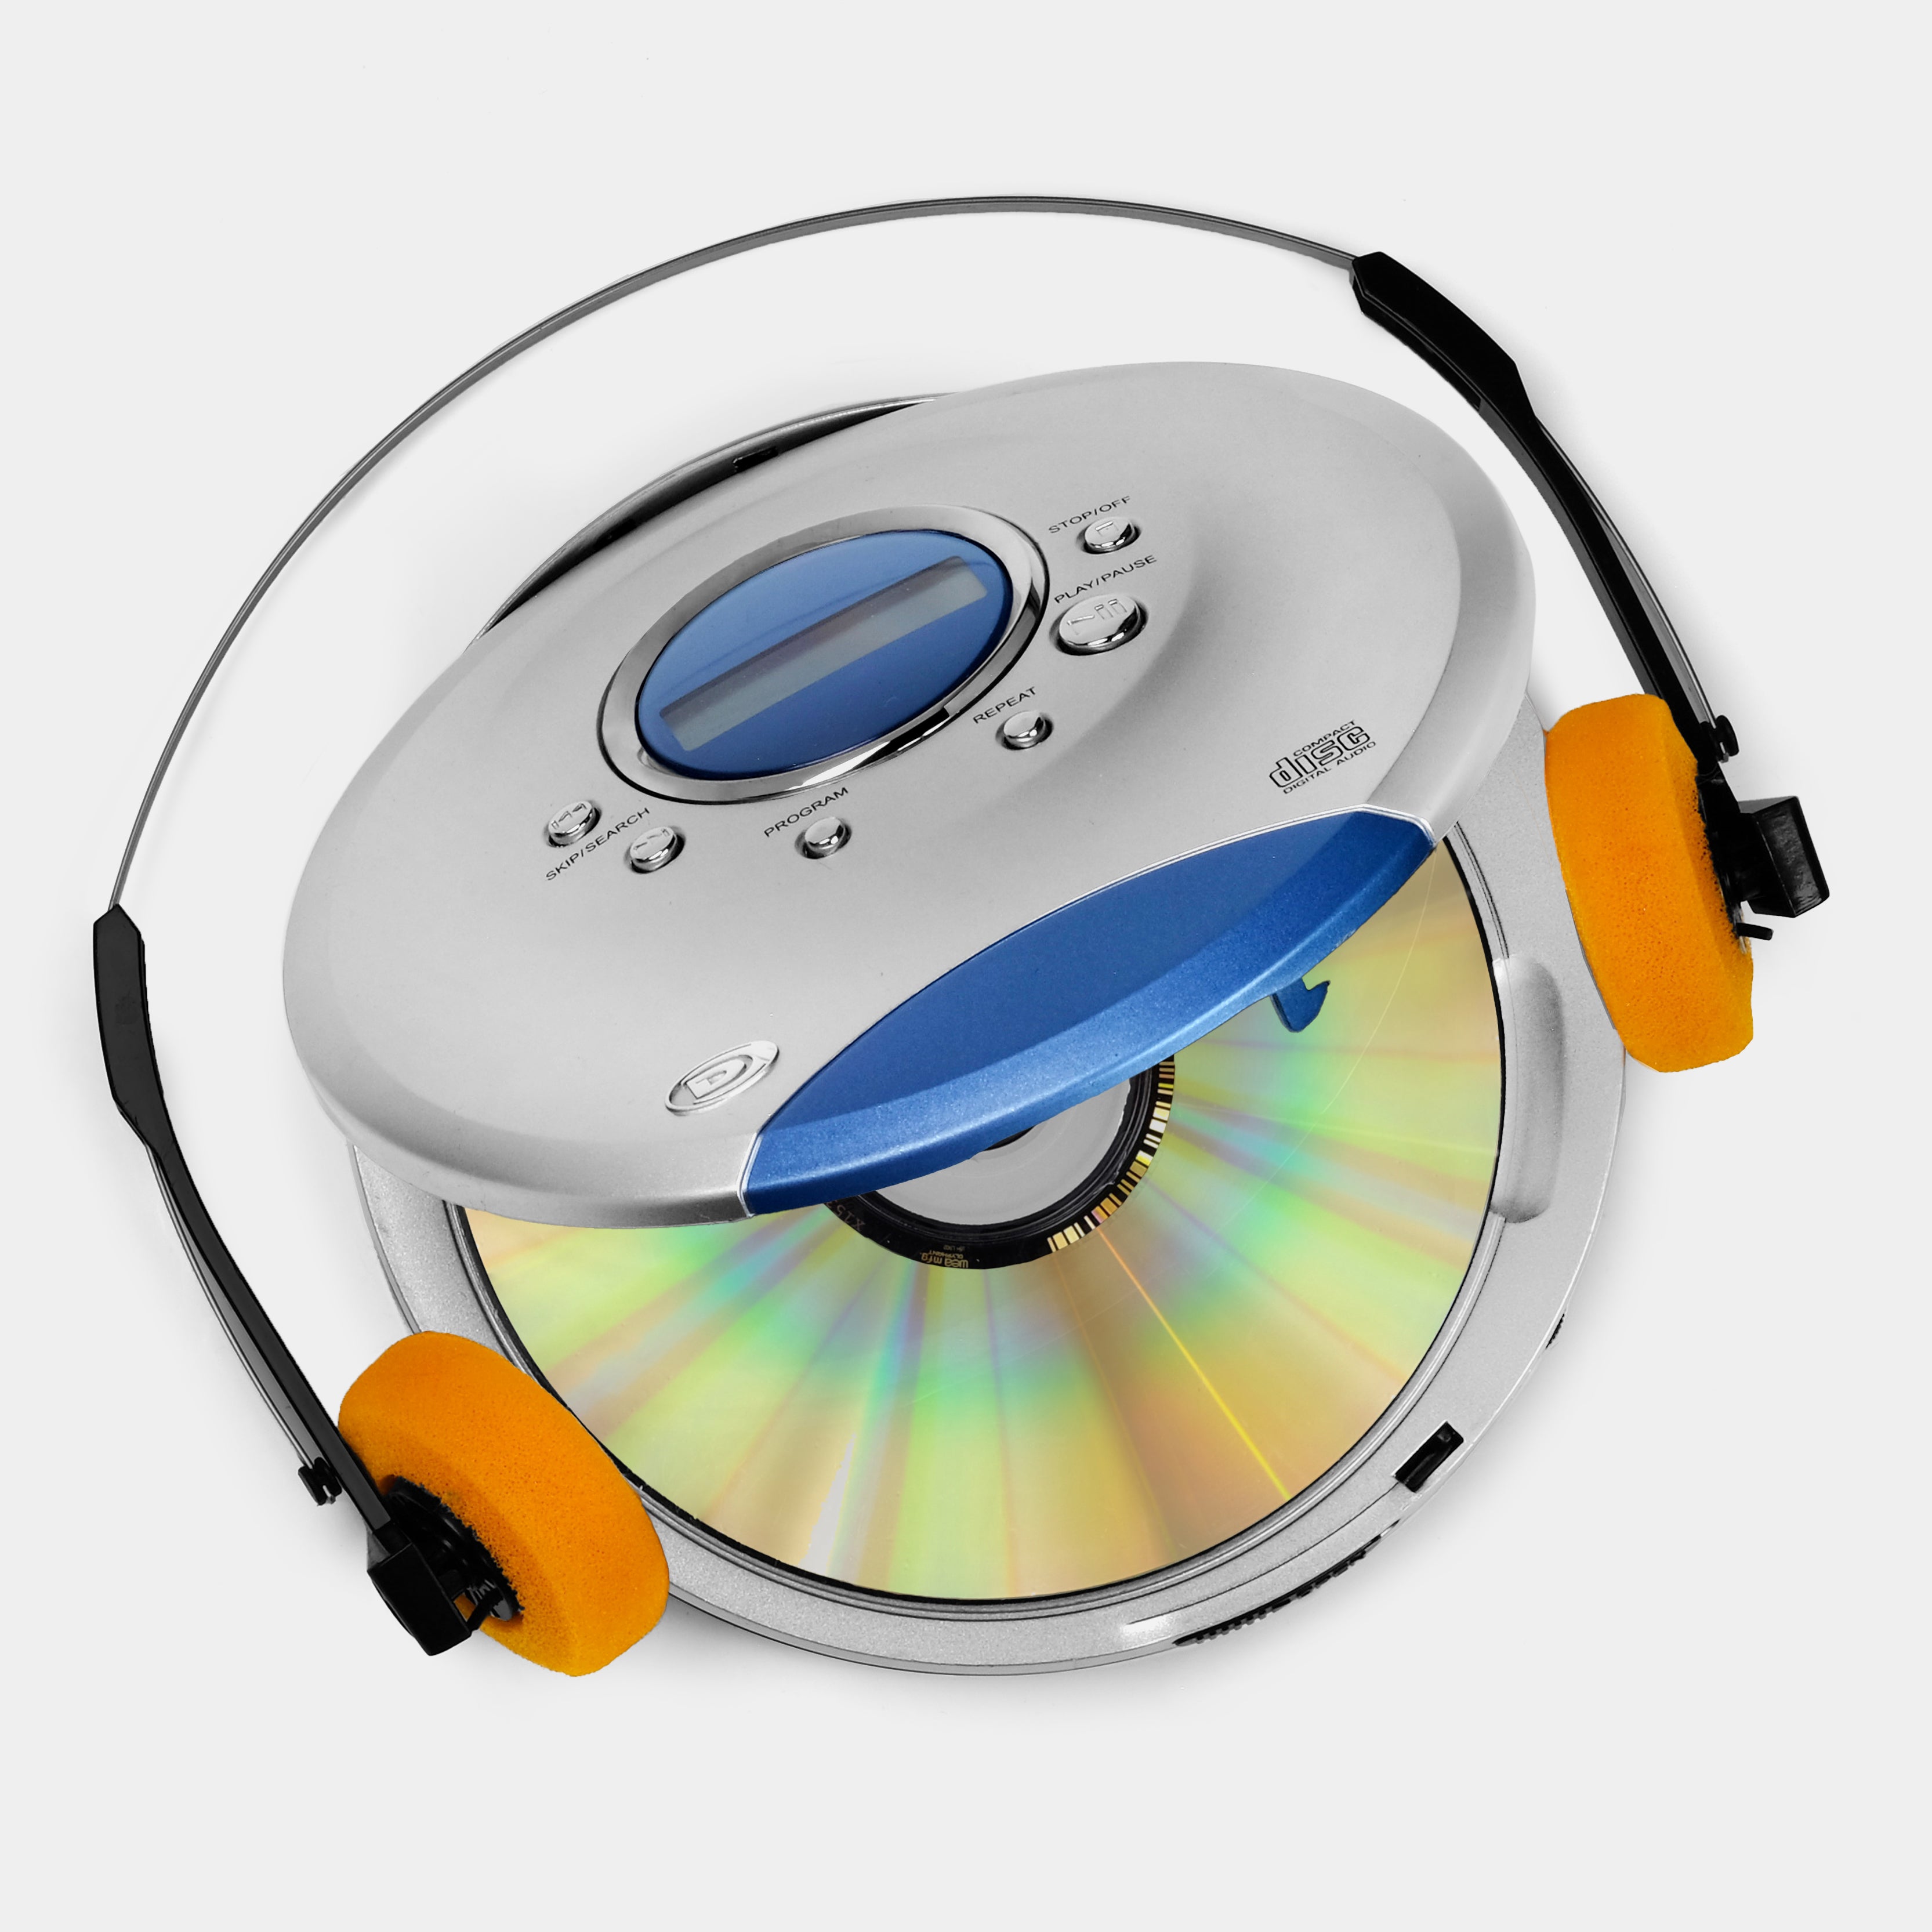 Durabrand CD-565 Portable CD Player